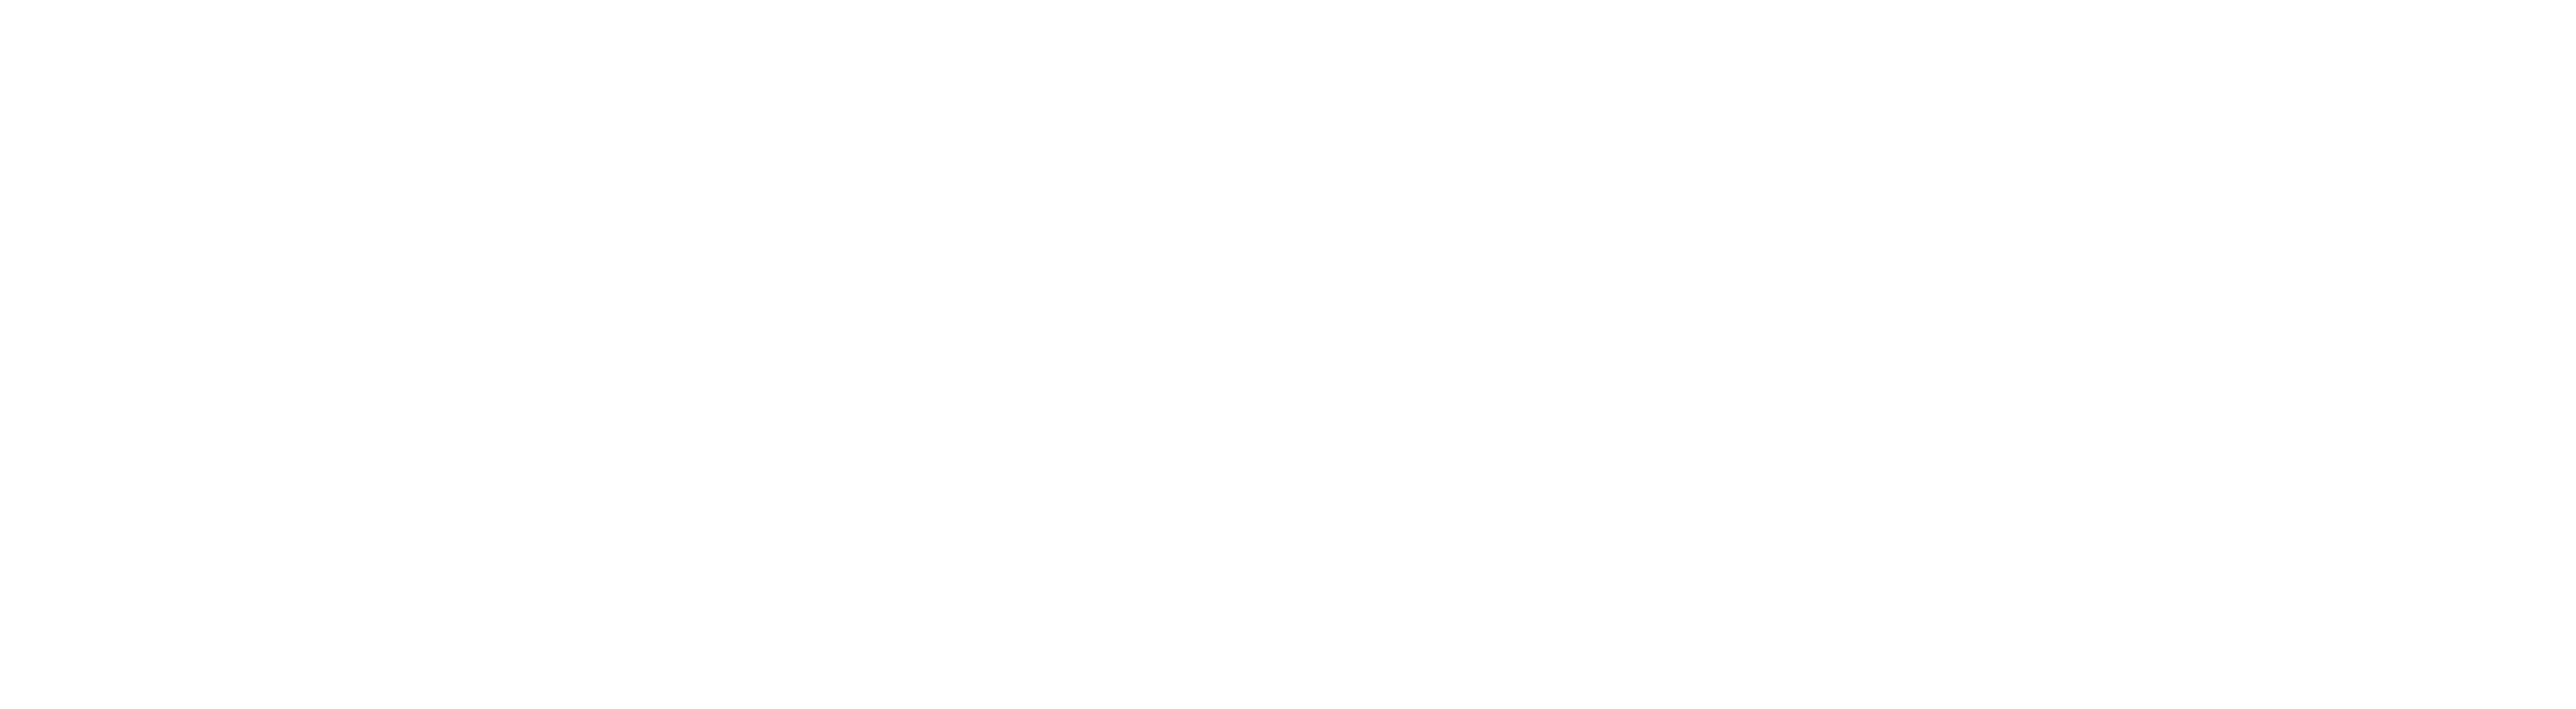 Dott.ssa Elena de Pasqua Osteopata